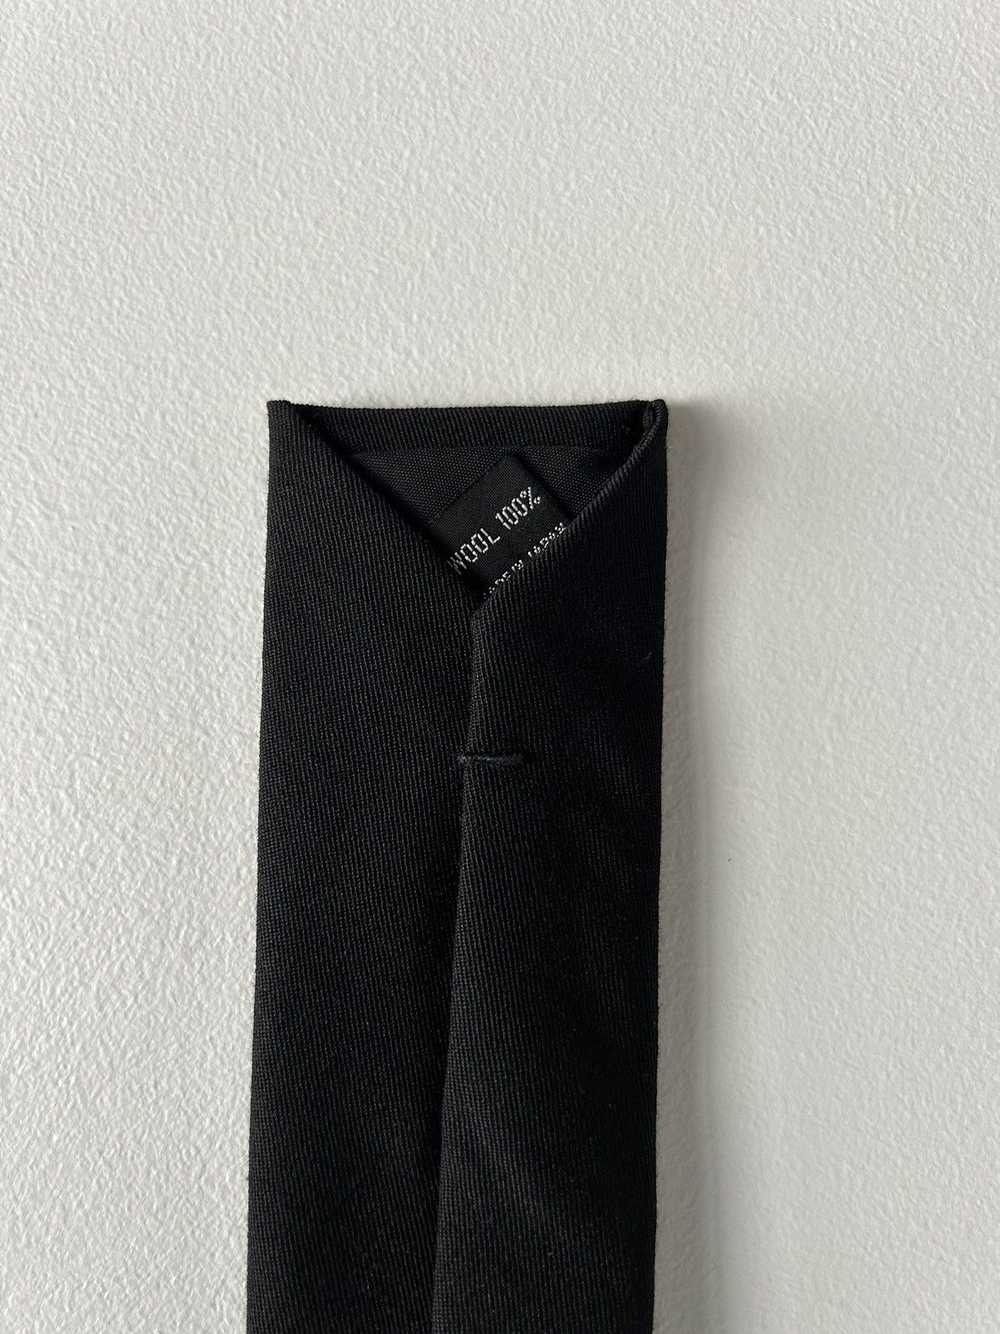 Yohji Yamamoto Rose Embroidered Wool Square Tie - image 5